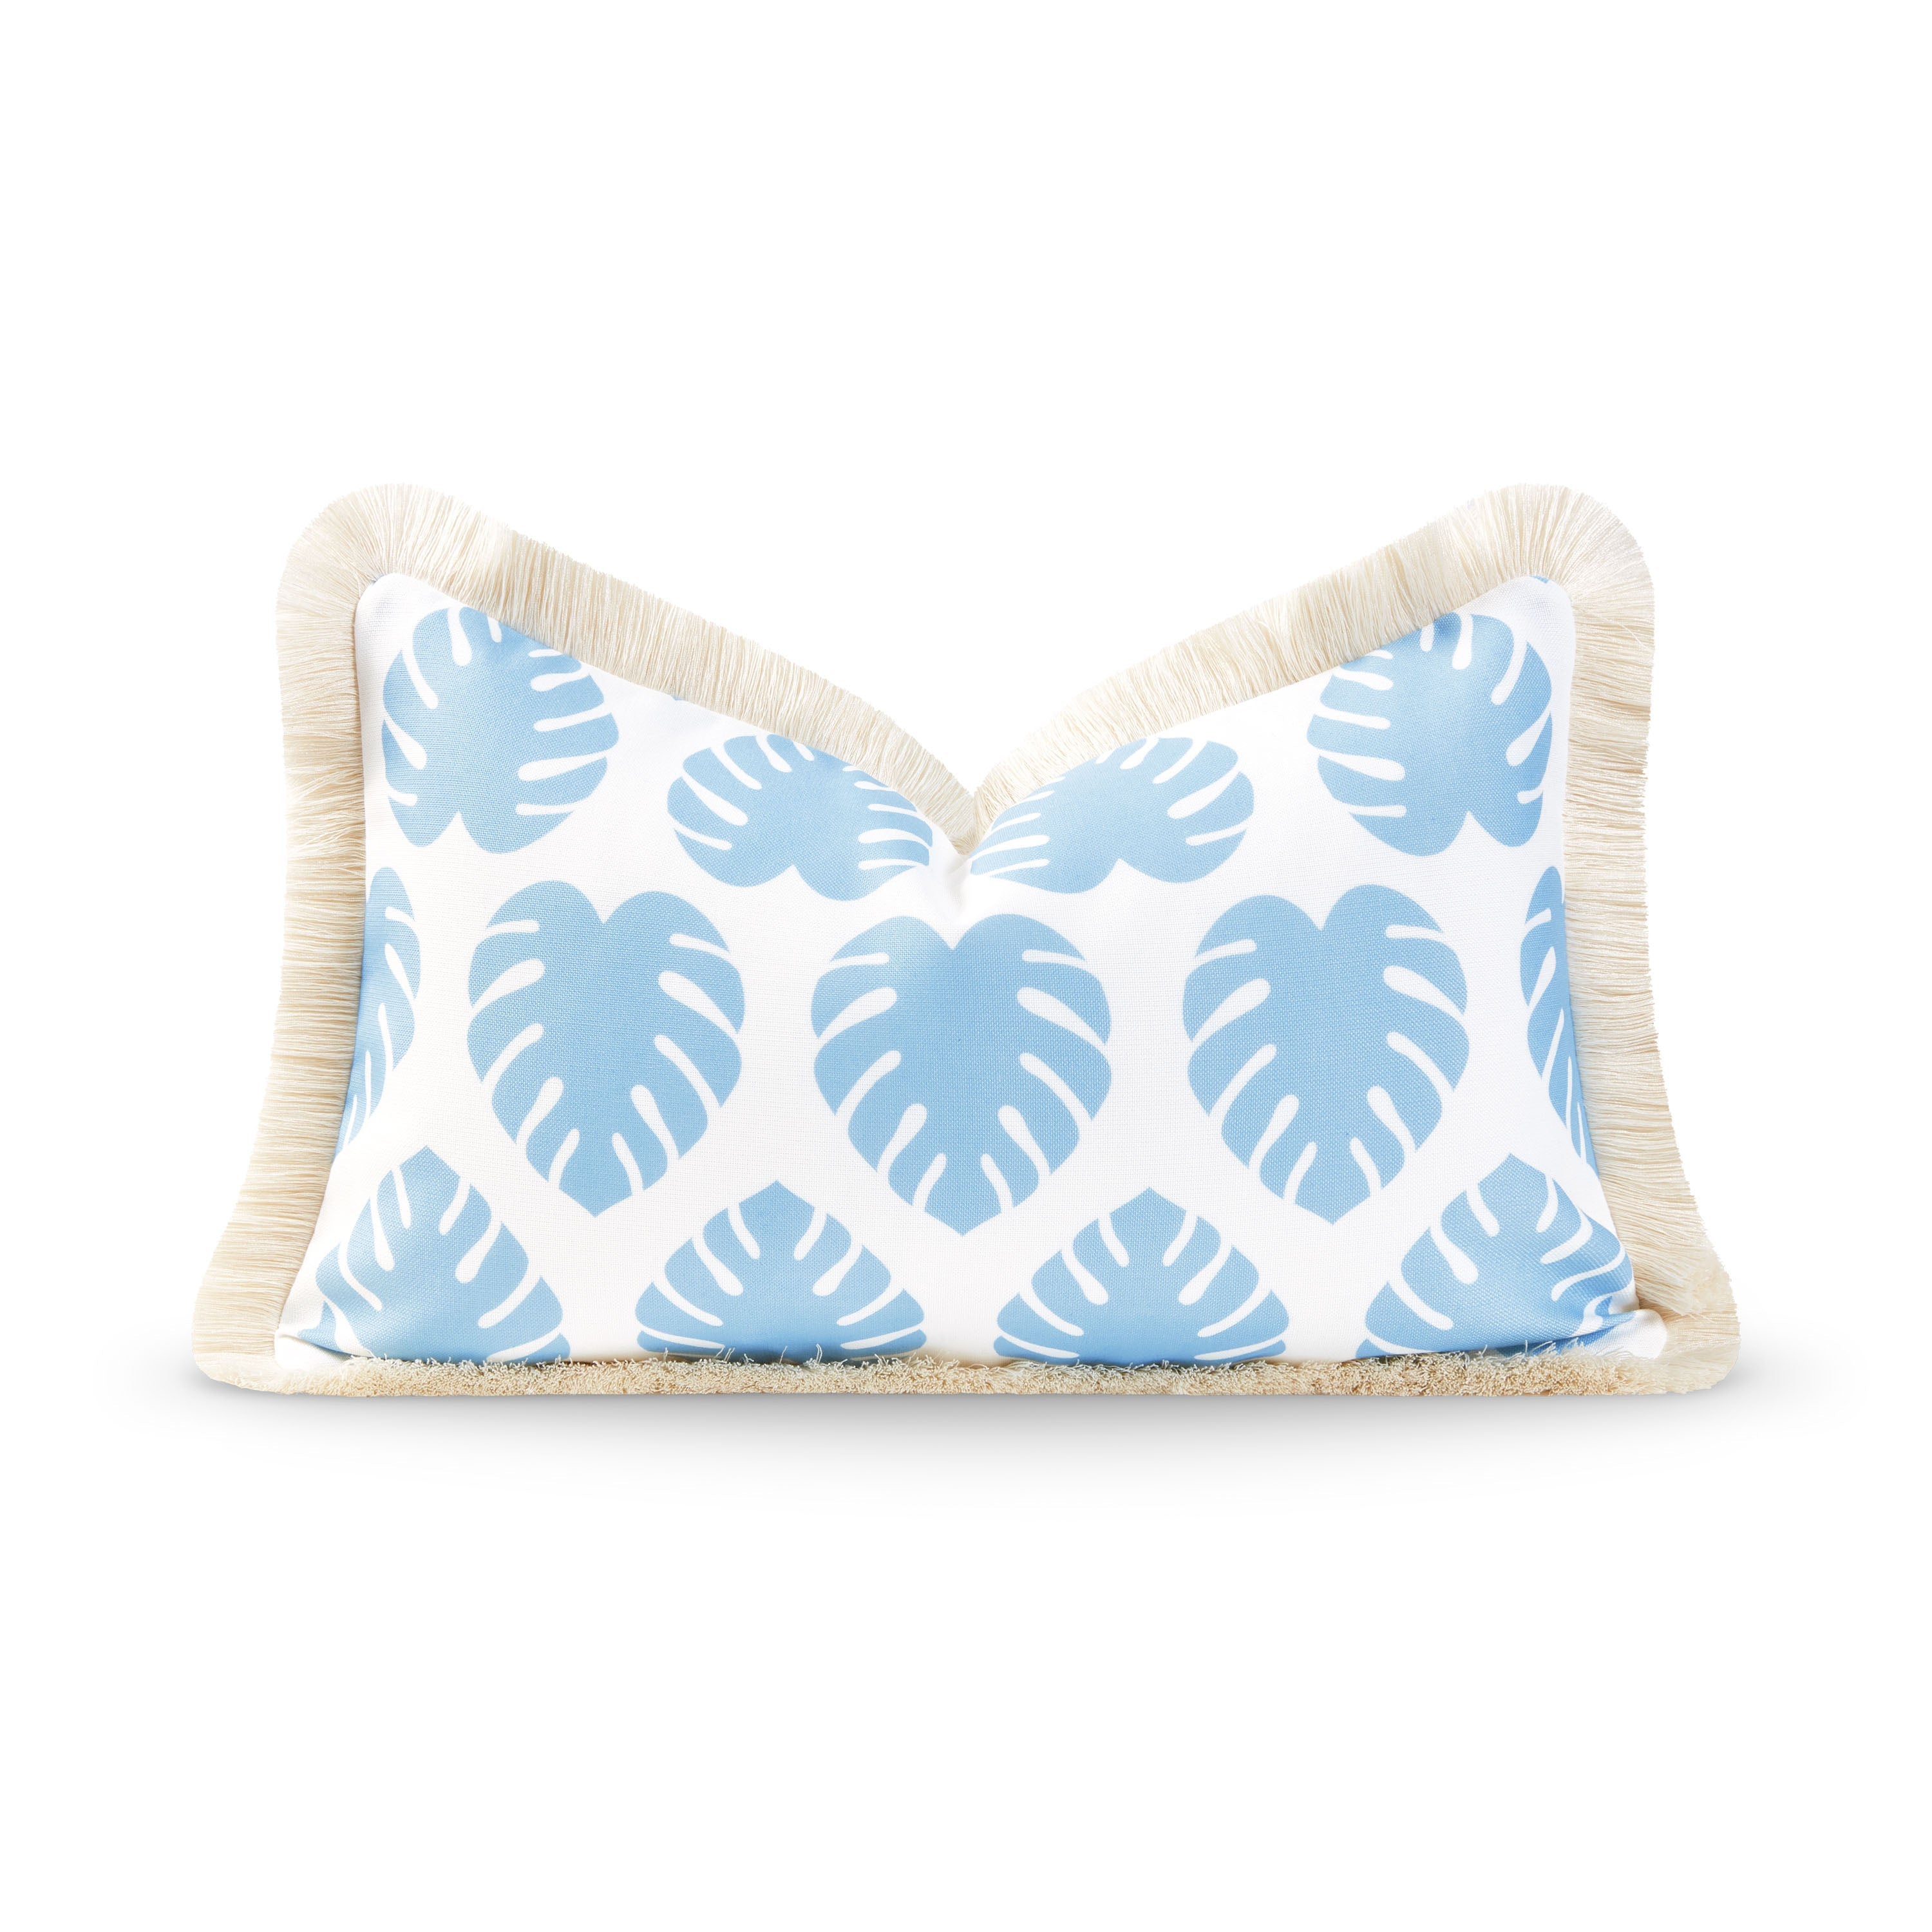 Coastal Hampton Style Indoor Outdoor Lumbar Pillow Cover, Monstera Leaf Fringe, Baby Blue, 12"x20"